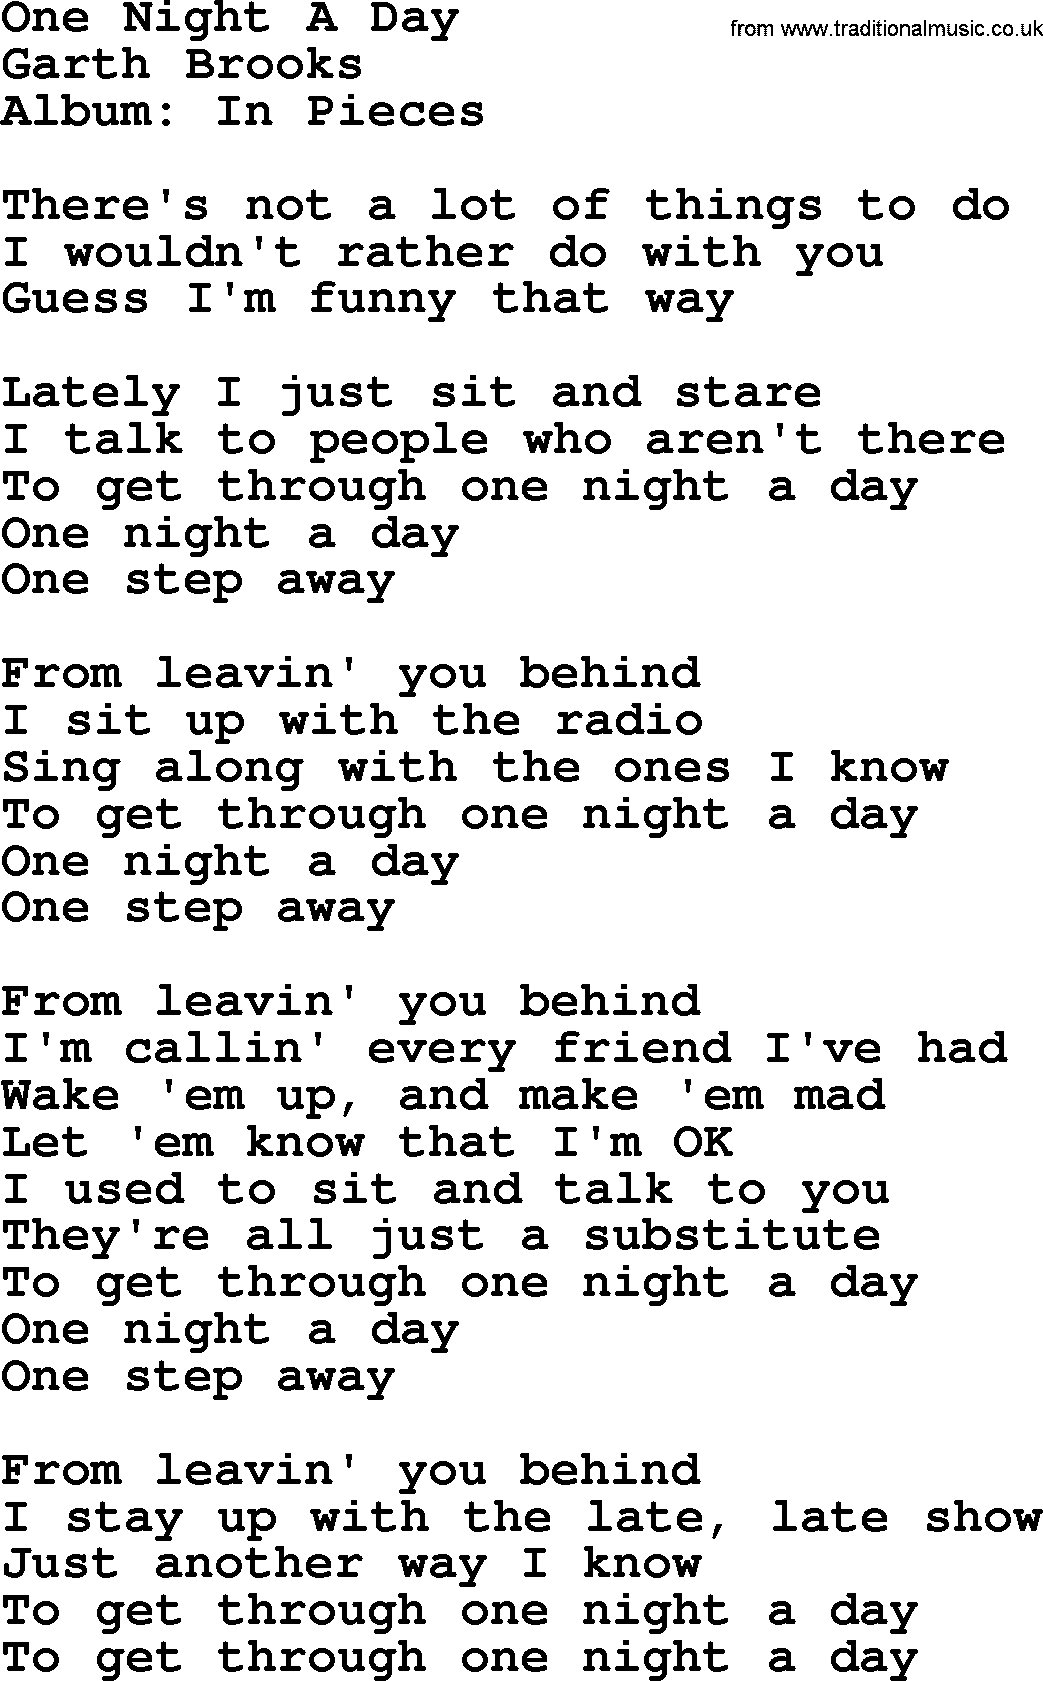 Garth Brooks song: One Night A Day, lyrics